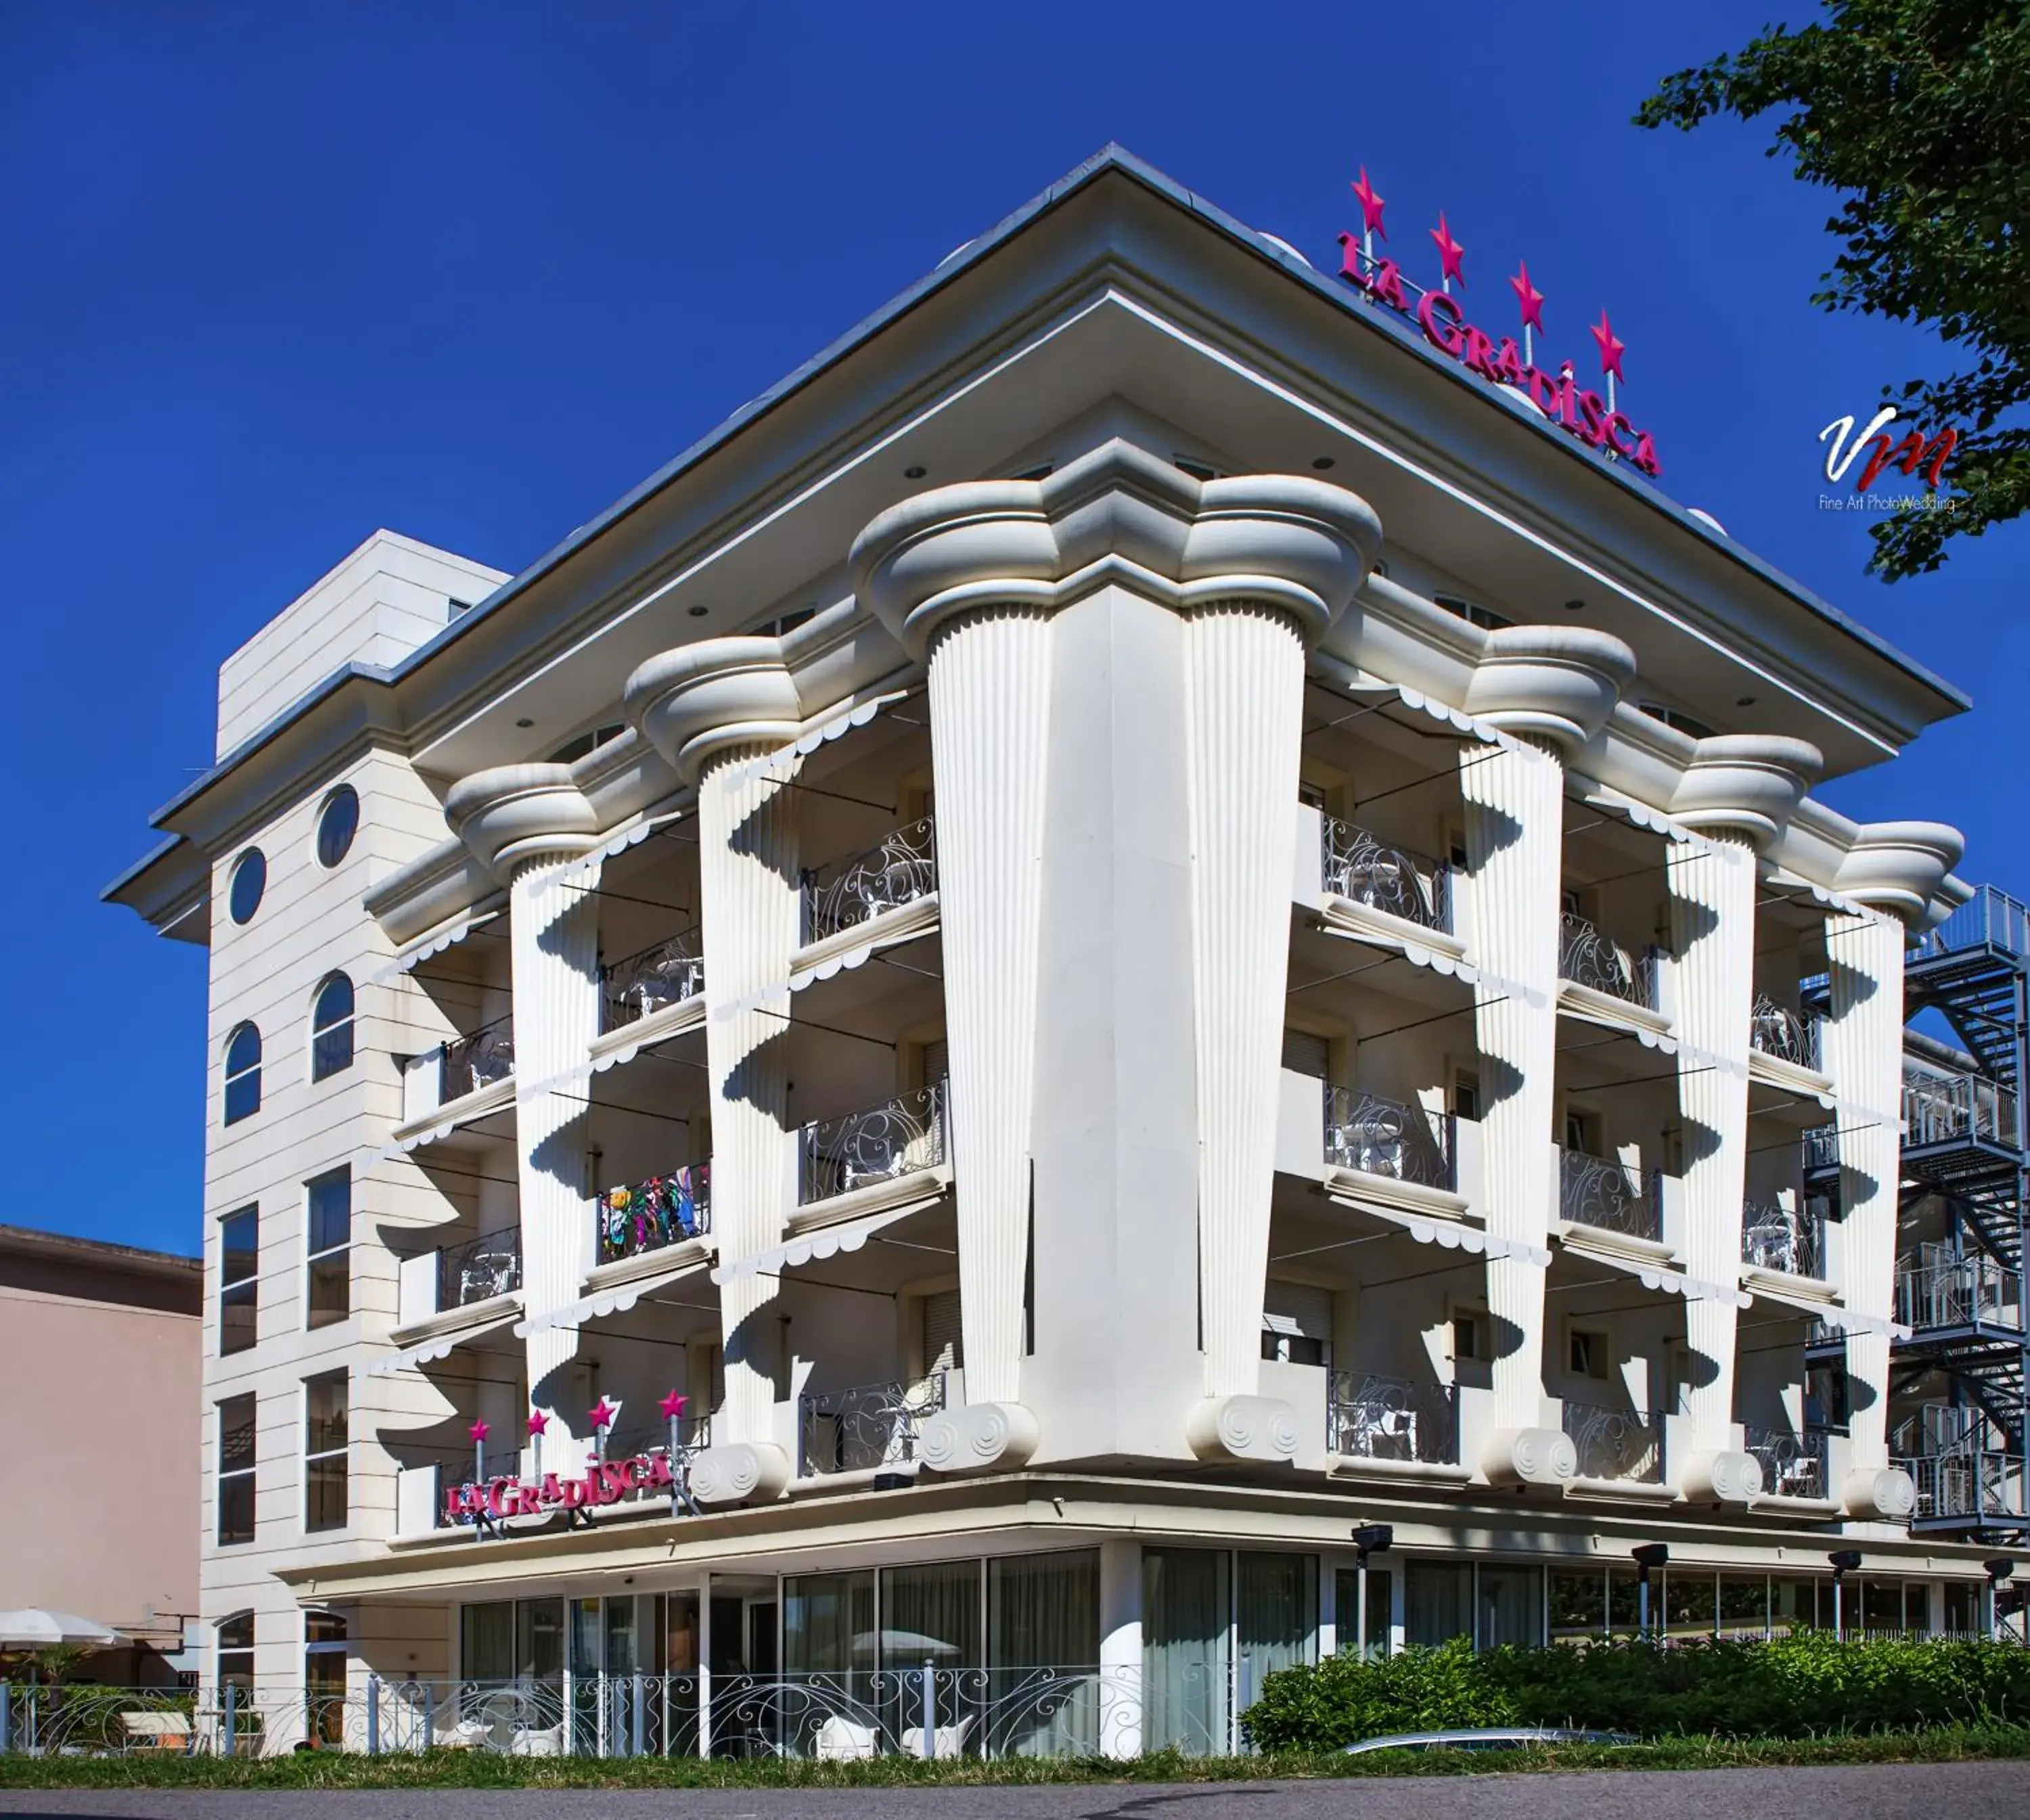 Property Building in Hotel La Gradisca